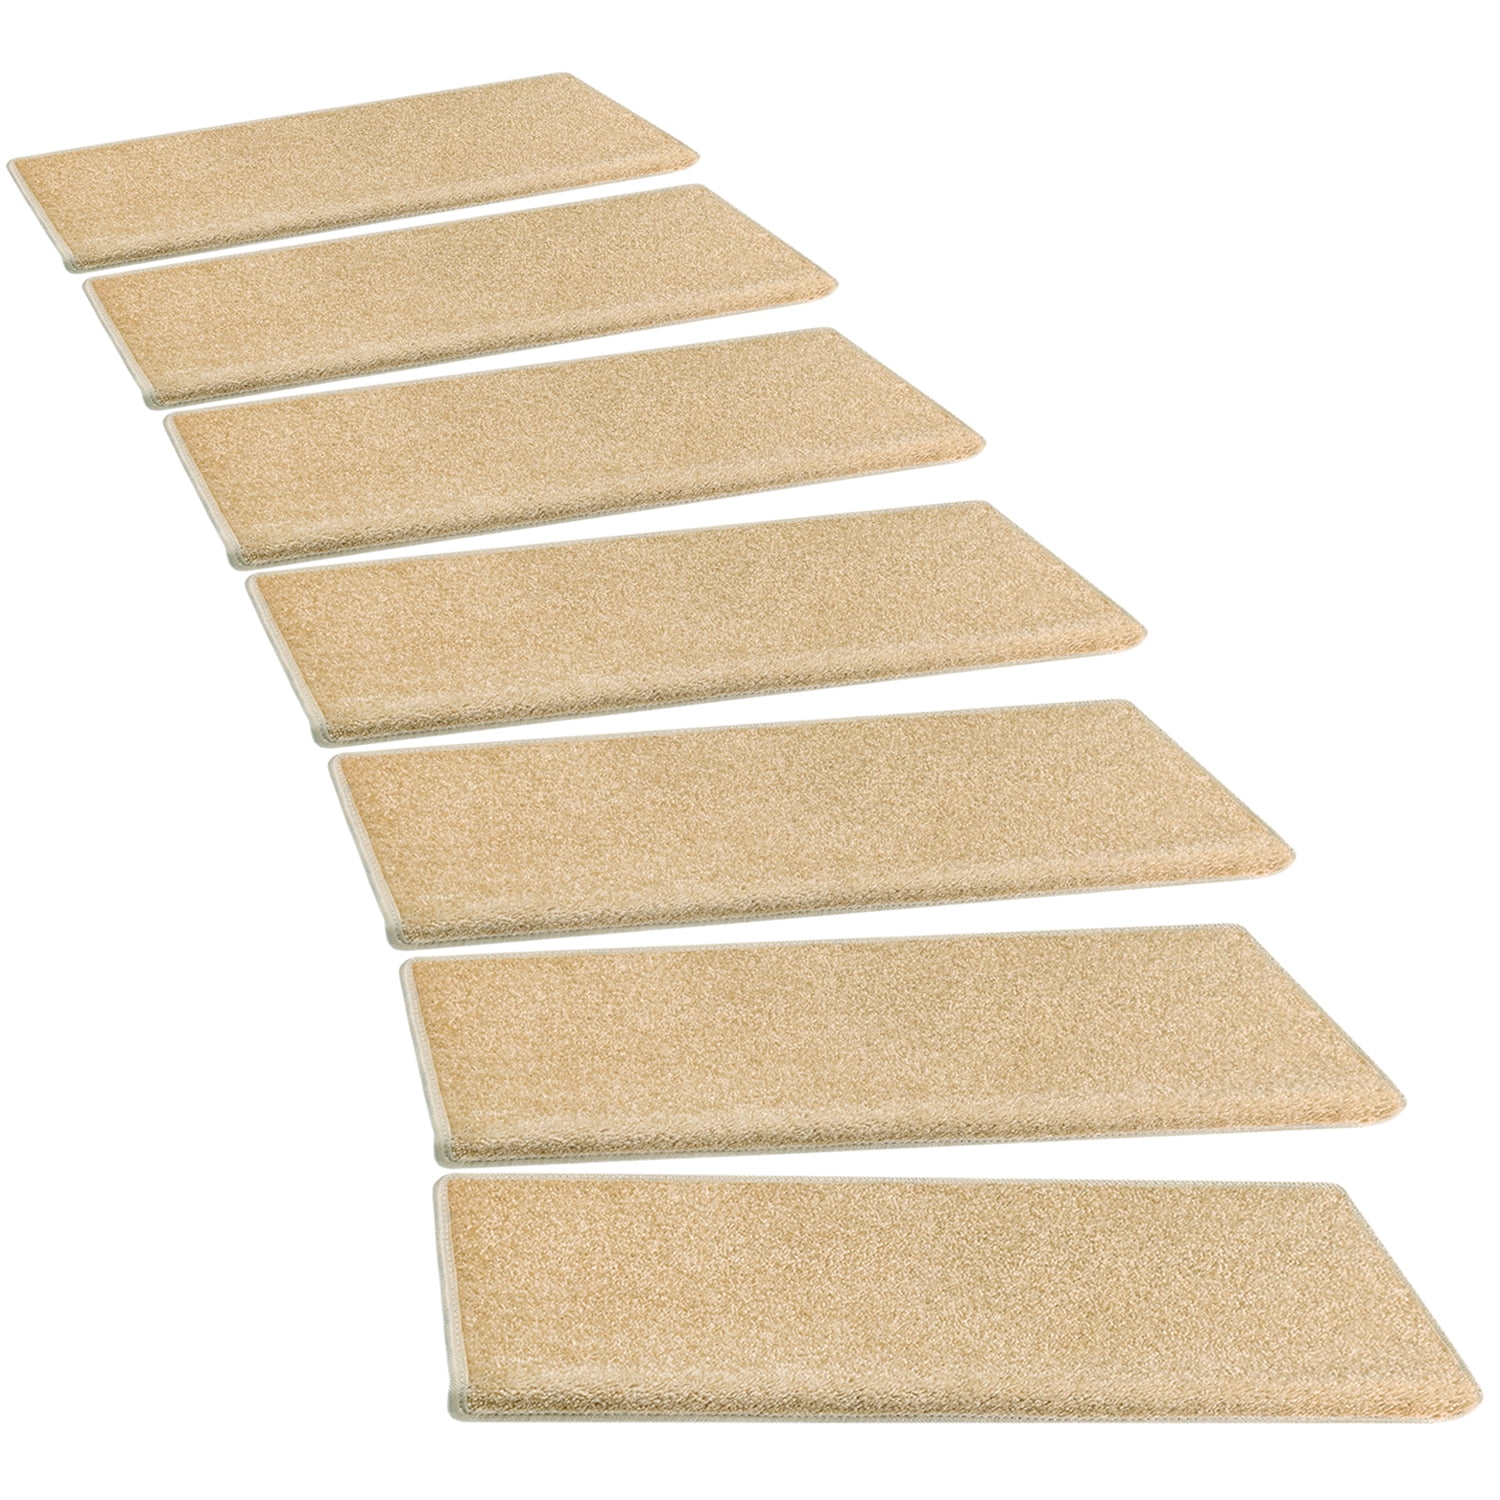 MATAHUM Stair Treads Carpect Non-Slip for Runner Wood Stairs Covers 15-Pack I... 